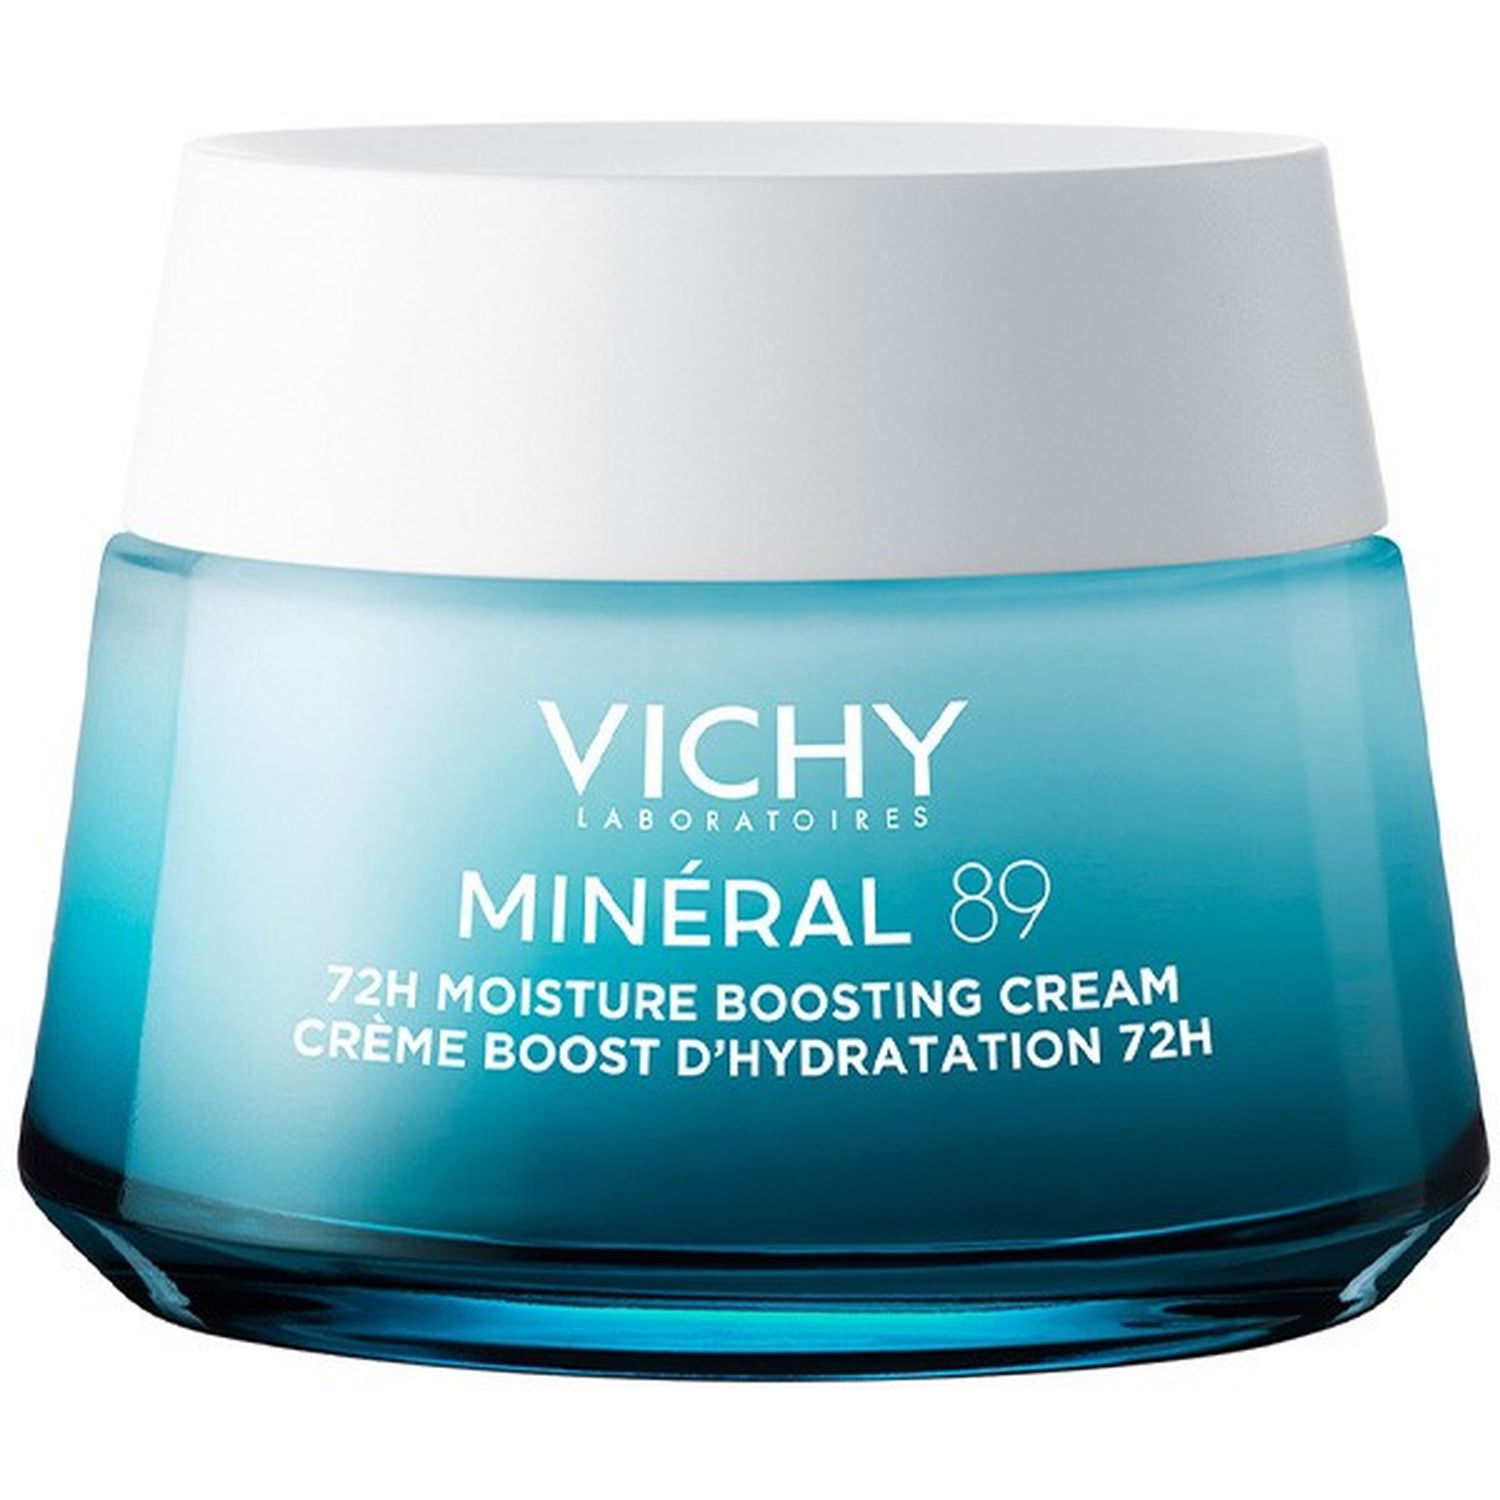 Легкий крем для всех типов кожи лица Vichy Mineral 89 Light 72H Moisture Boosting Cream, 50 мл - фото 1